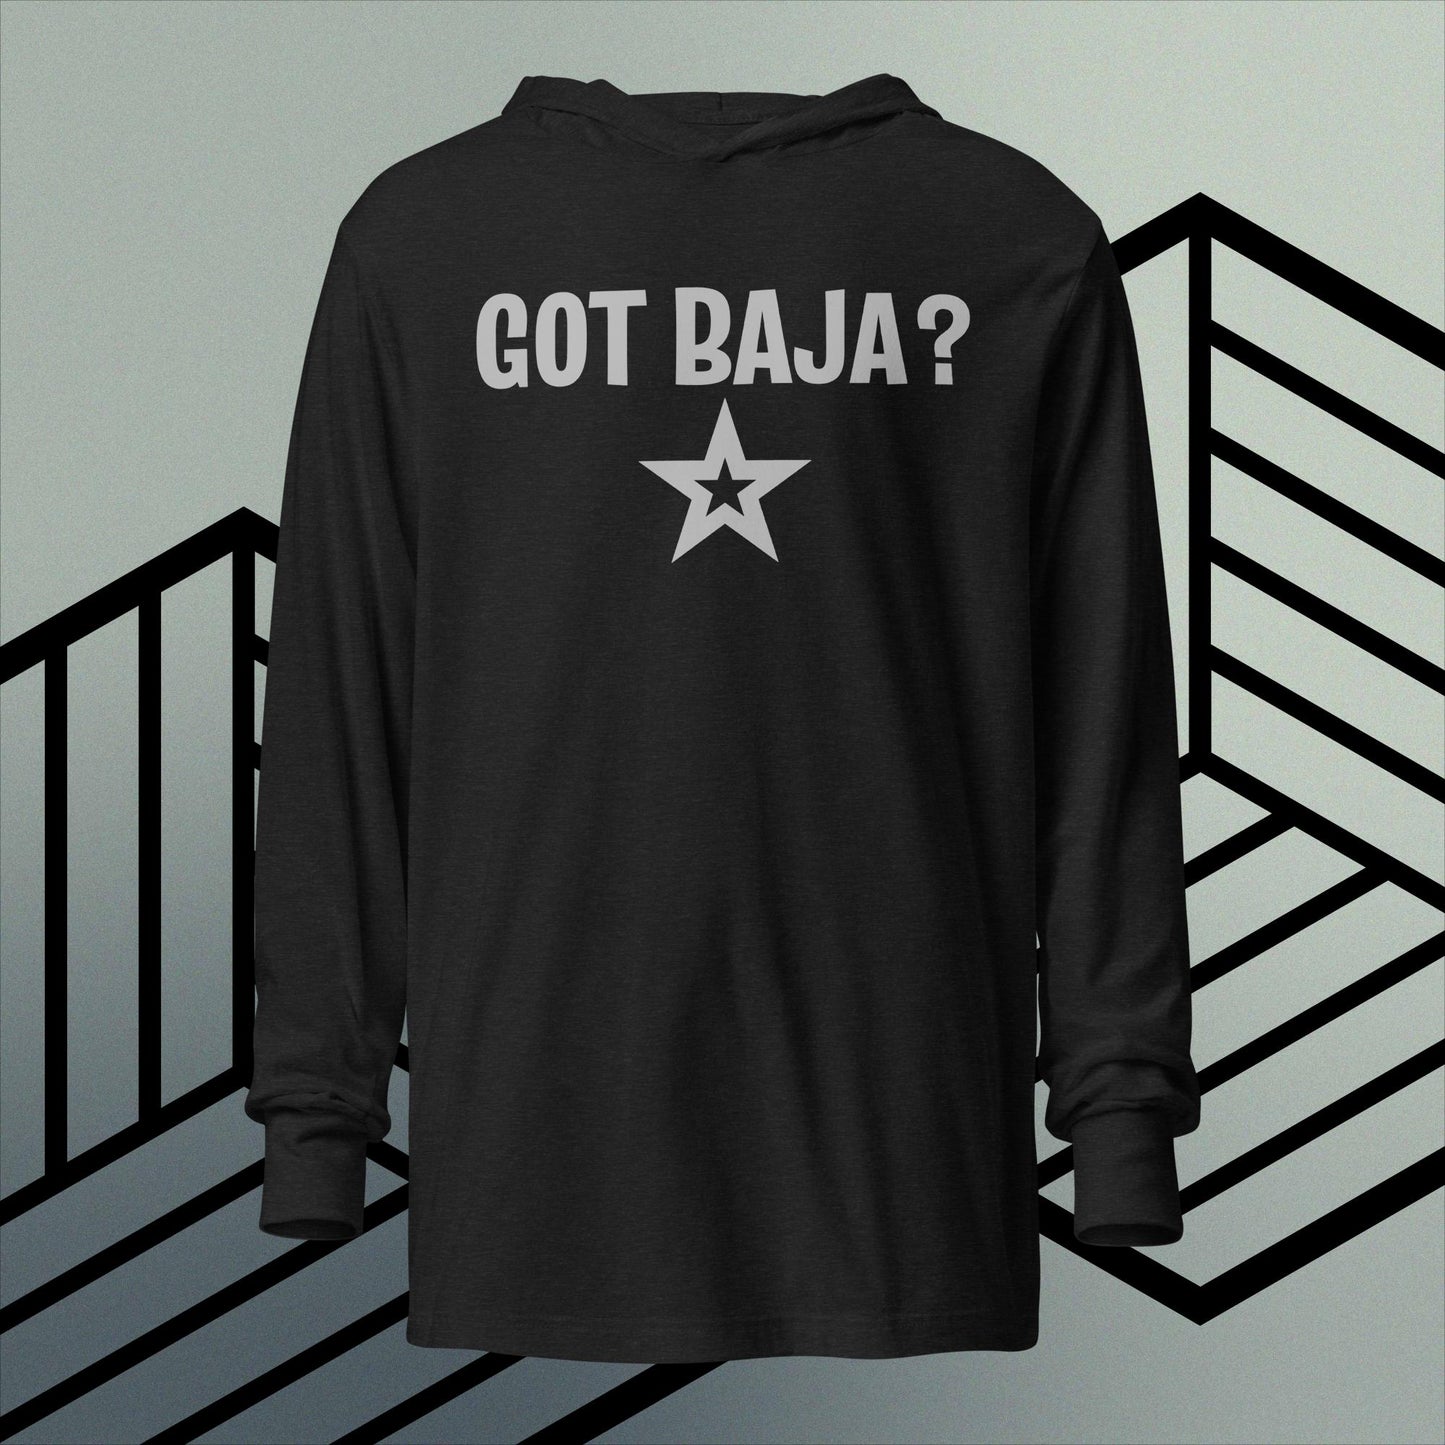 Got Baja? hooded T